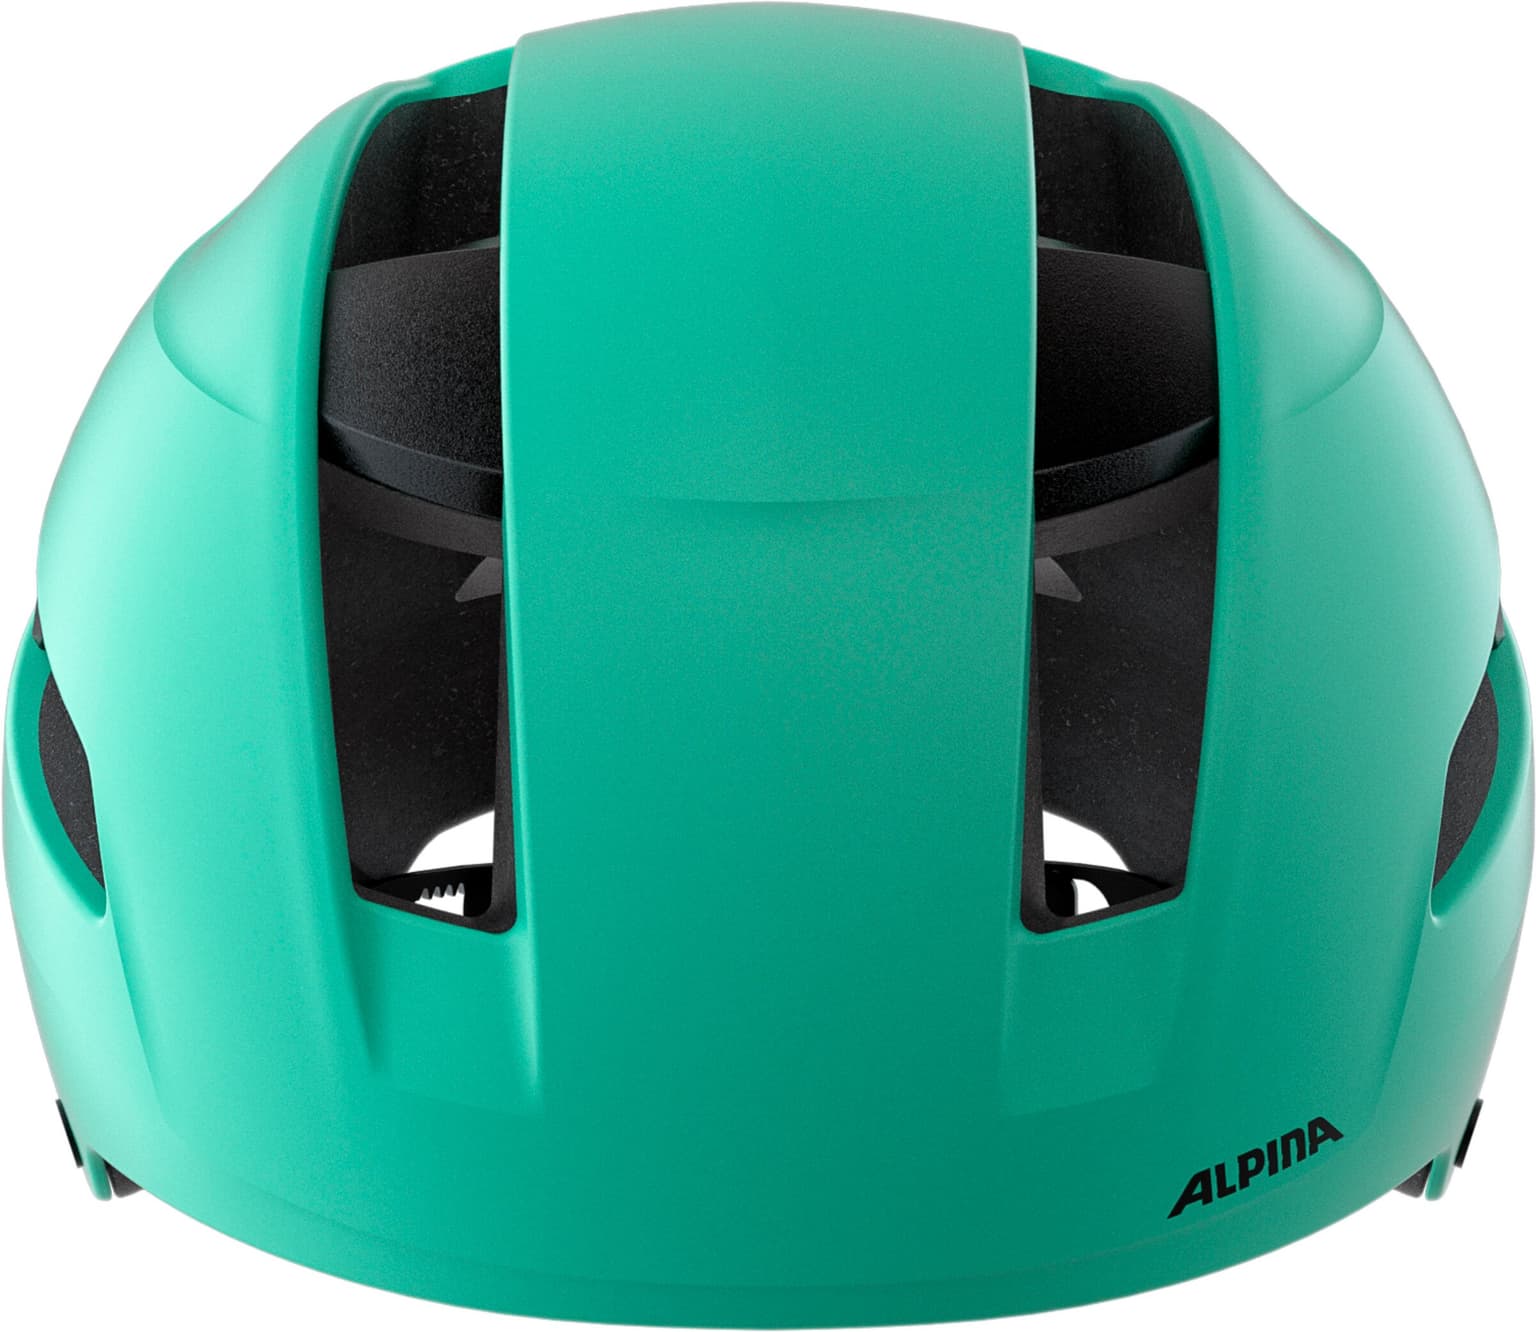 Alpina SOHO casque de vélo turquoise-claire 2